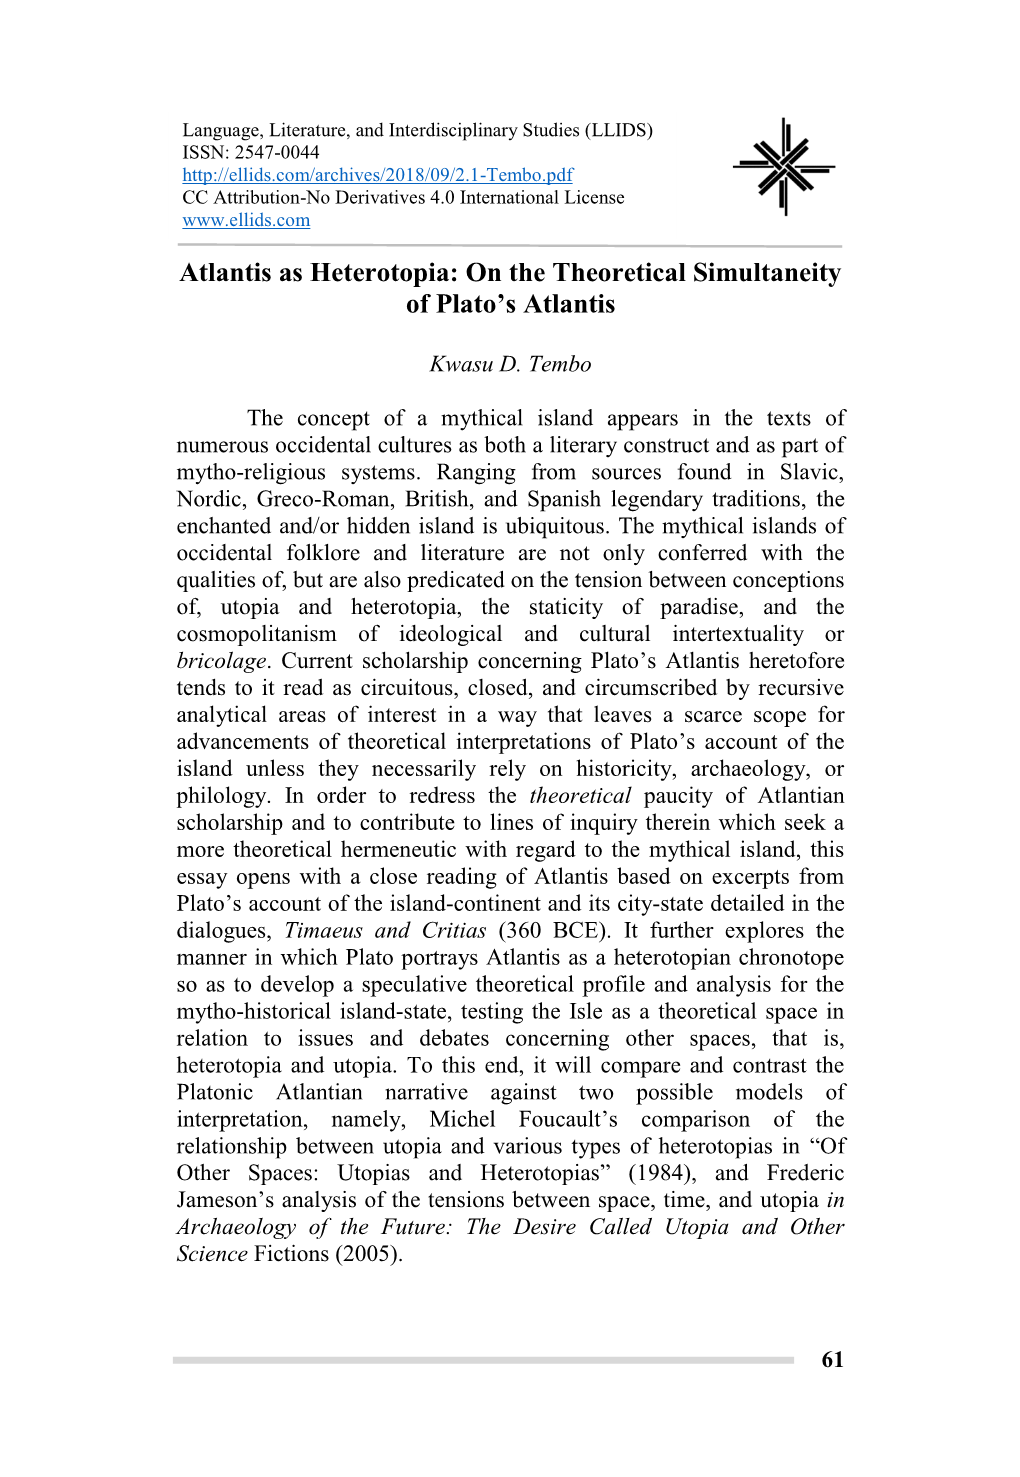 Atlantis As Heterotopia: on the Theoretical Simultaneity of Plato's